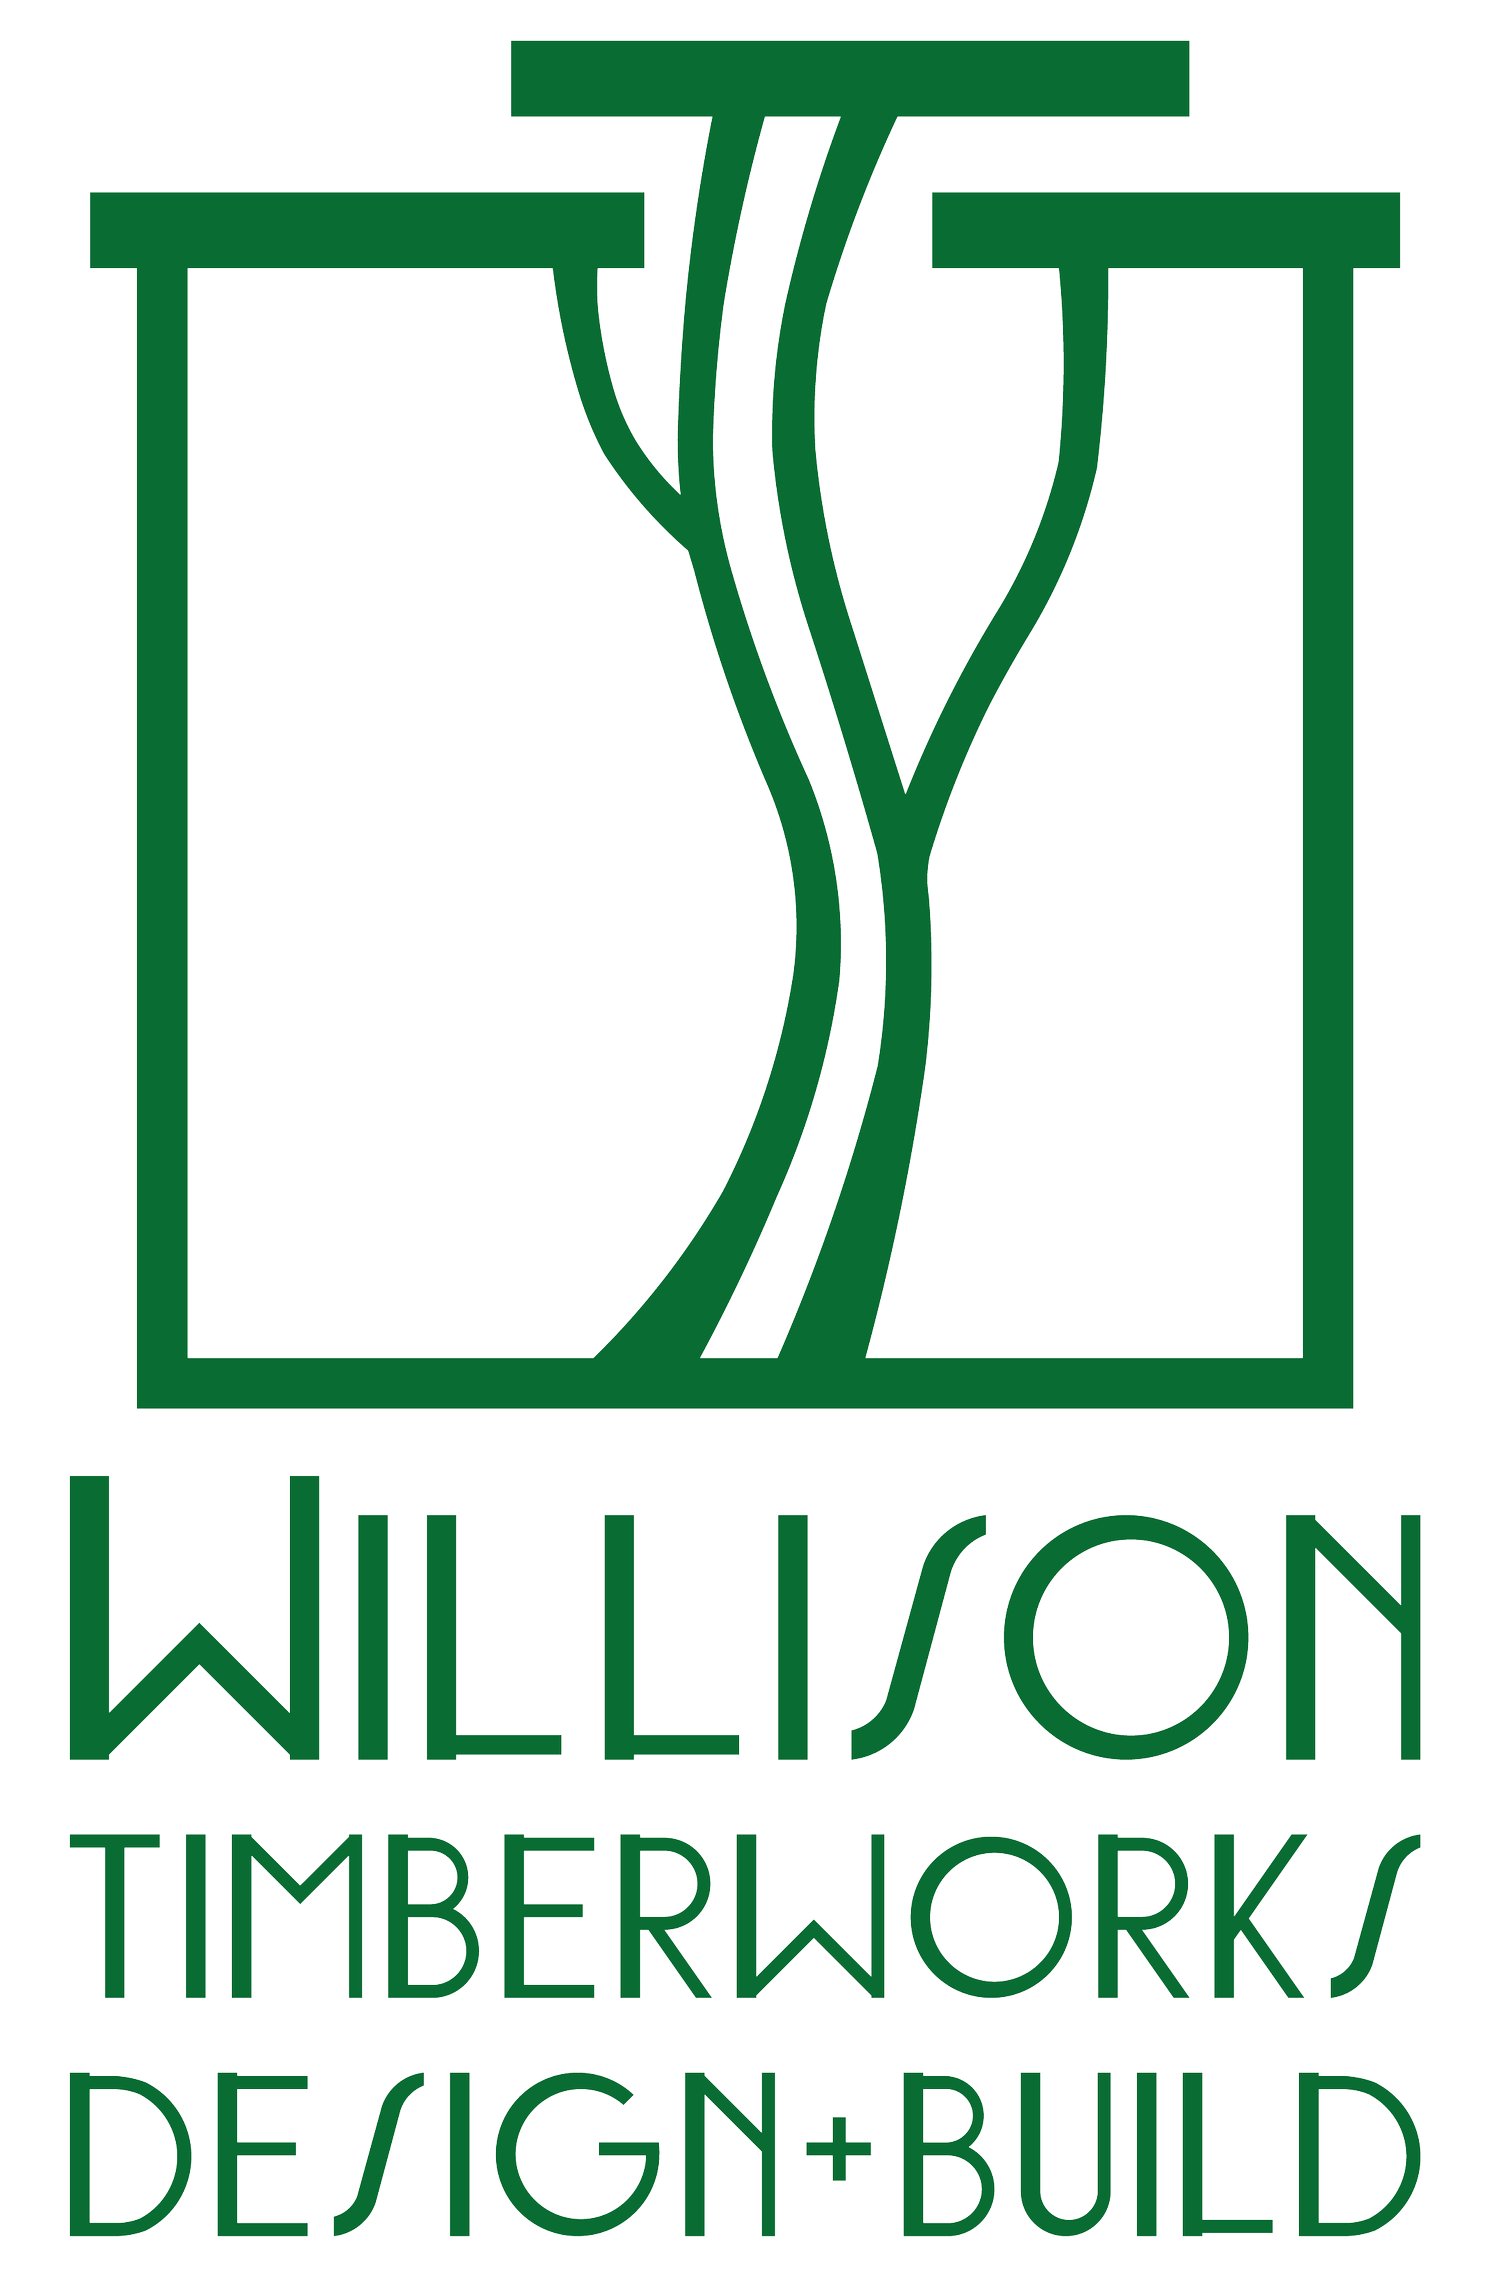 Willison Timberworks Design Build